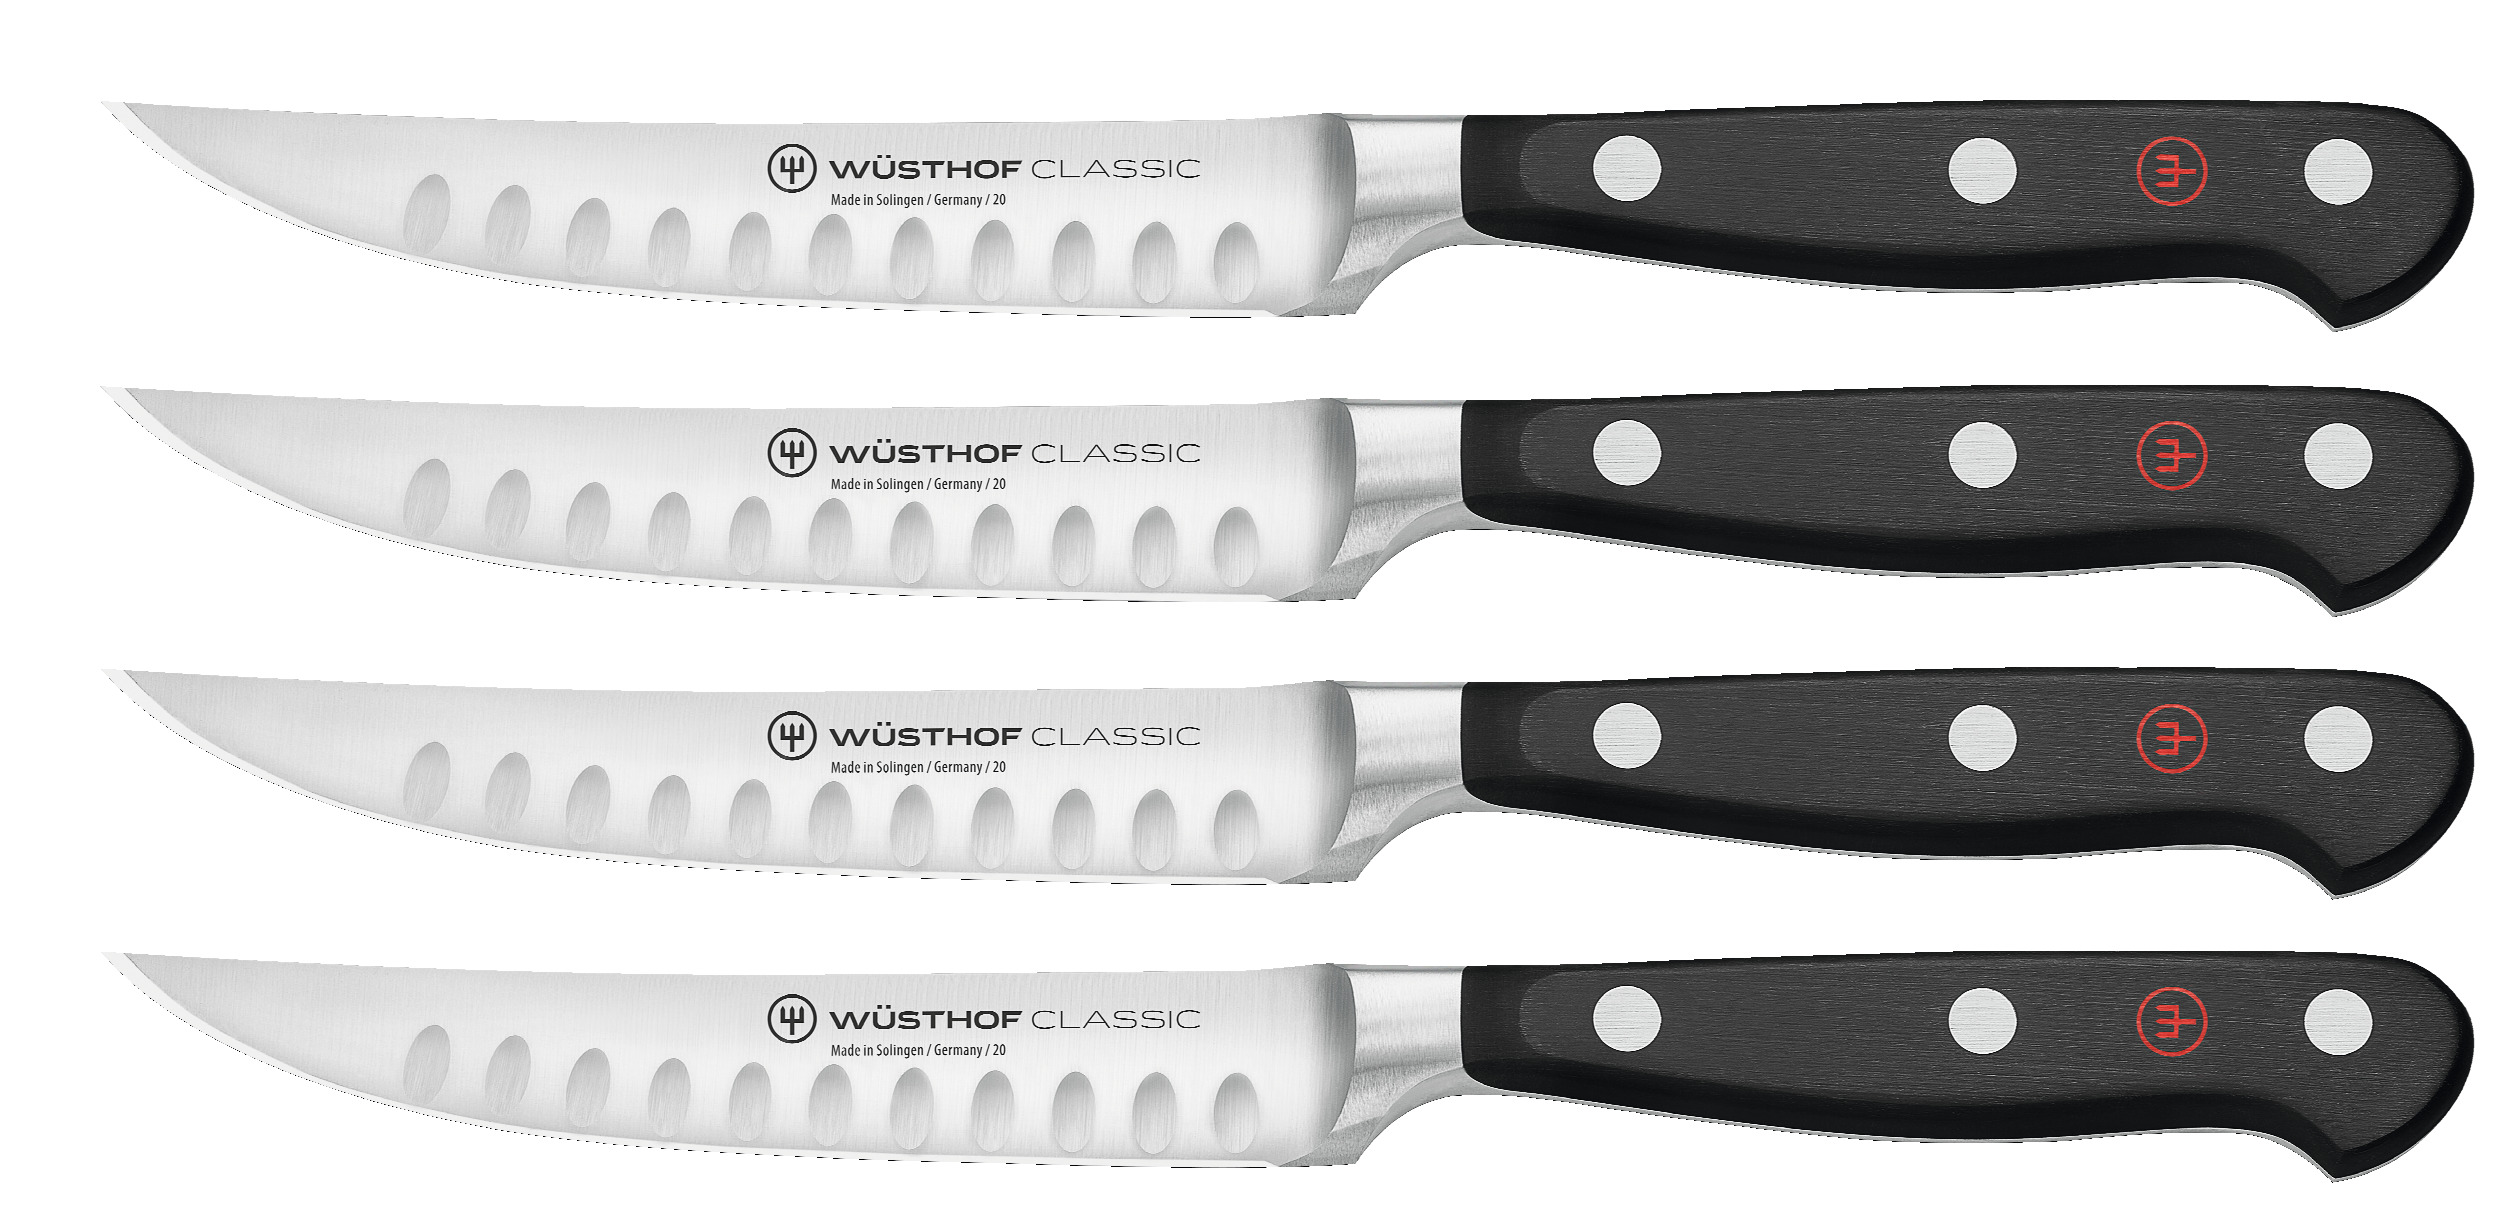 Wusthof Classic Ikon 4 Piece Steak Knife Set